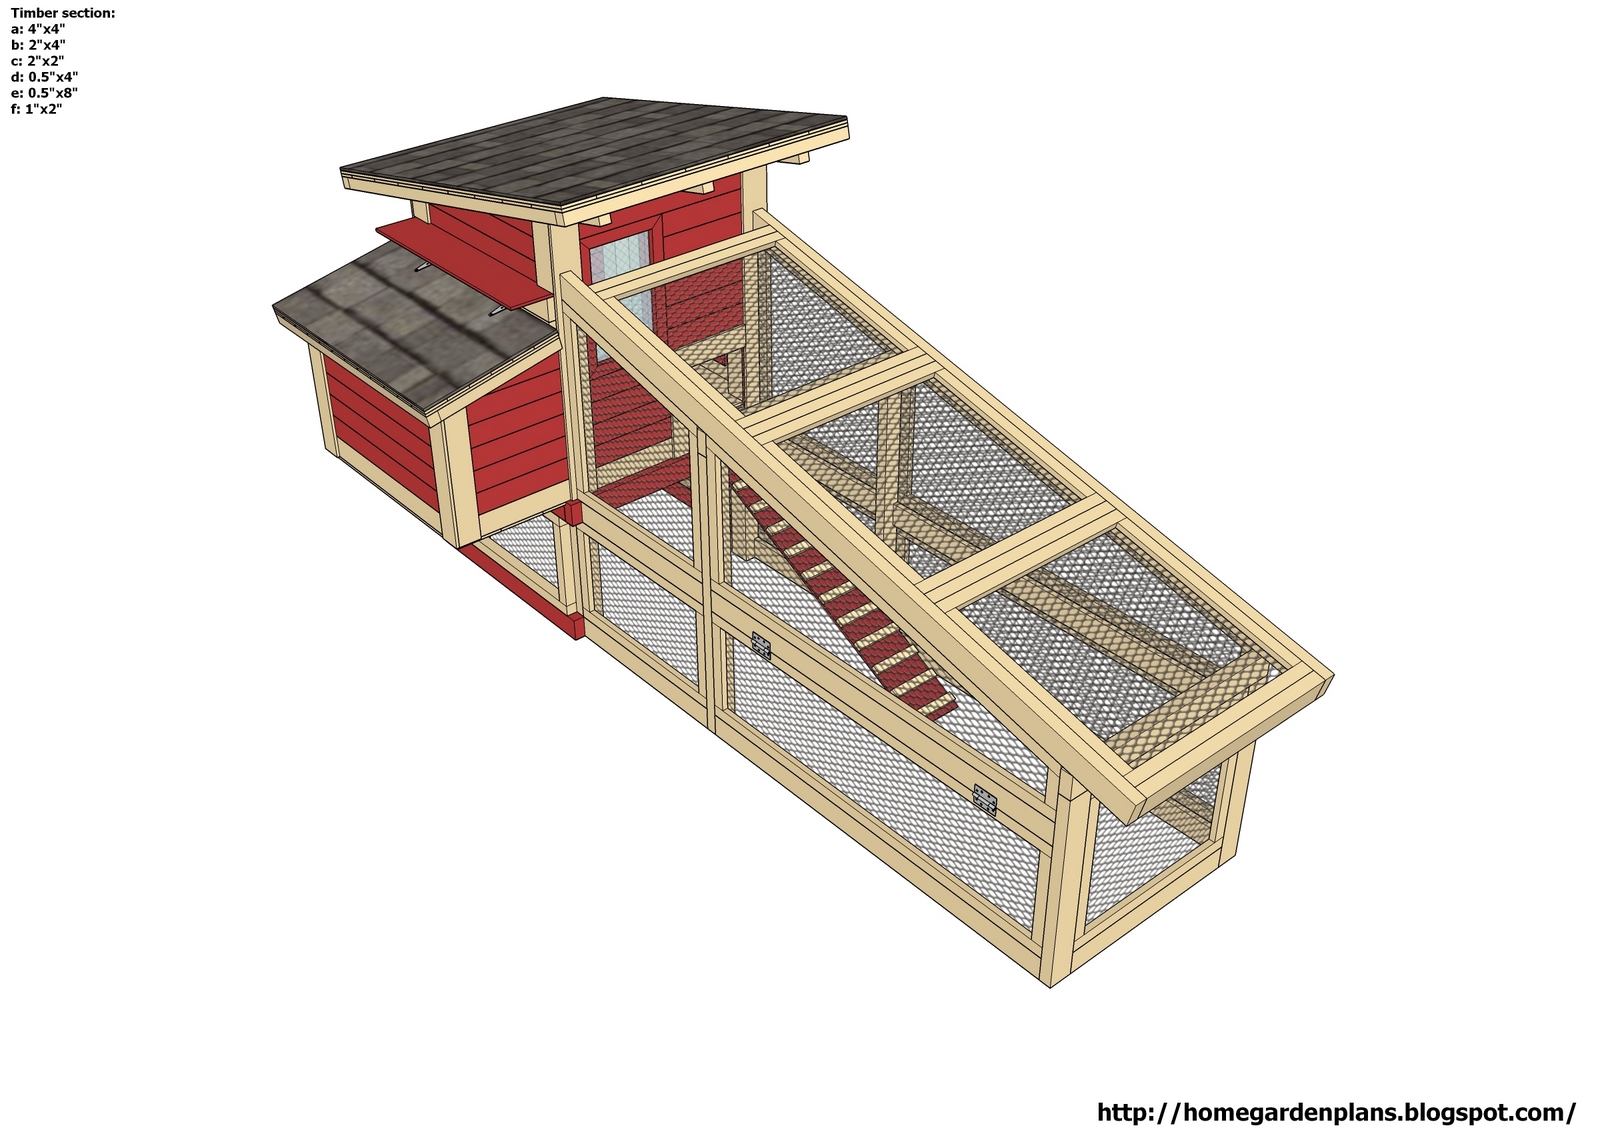 S100 - Chicken Coop Plans Construction - Chicken Coop Design - How To 